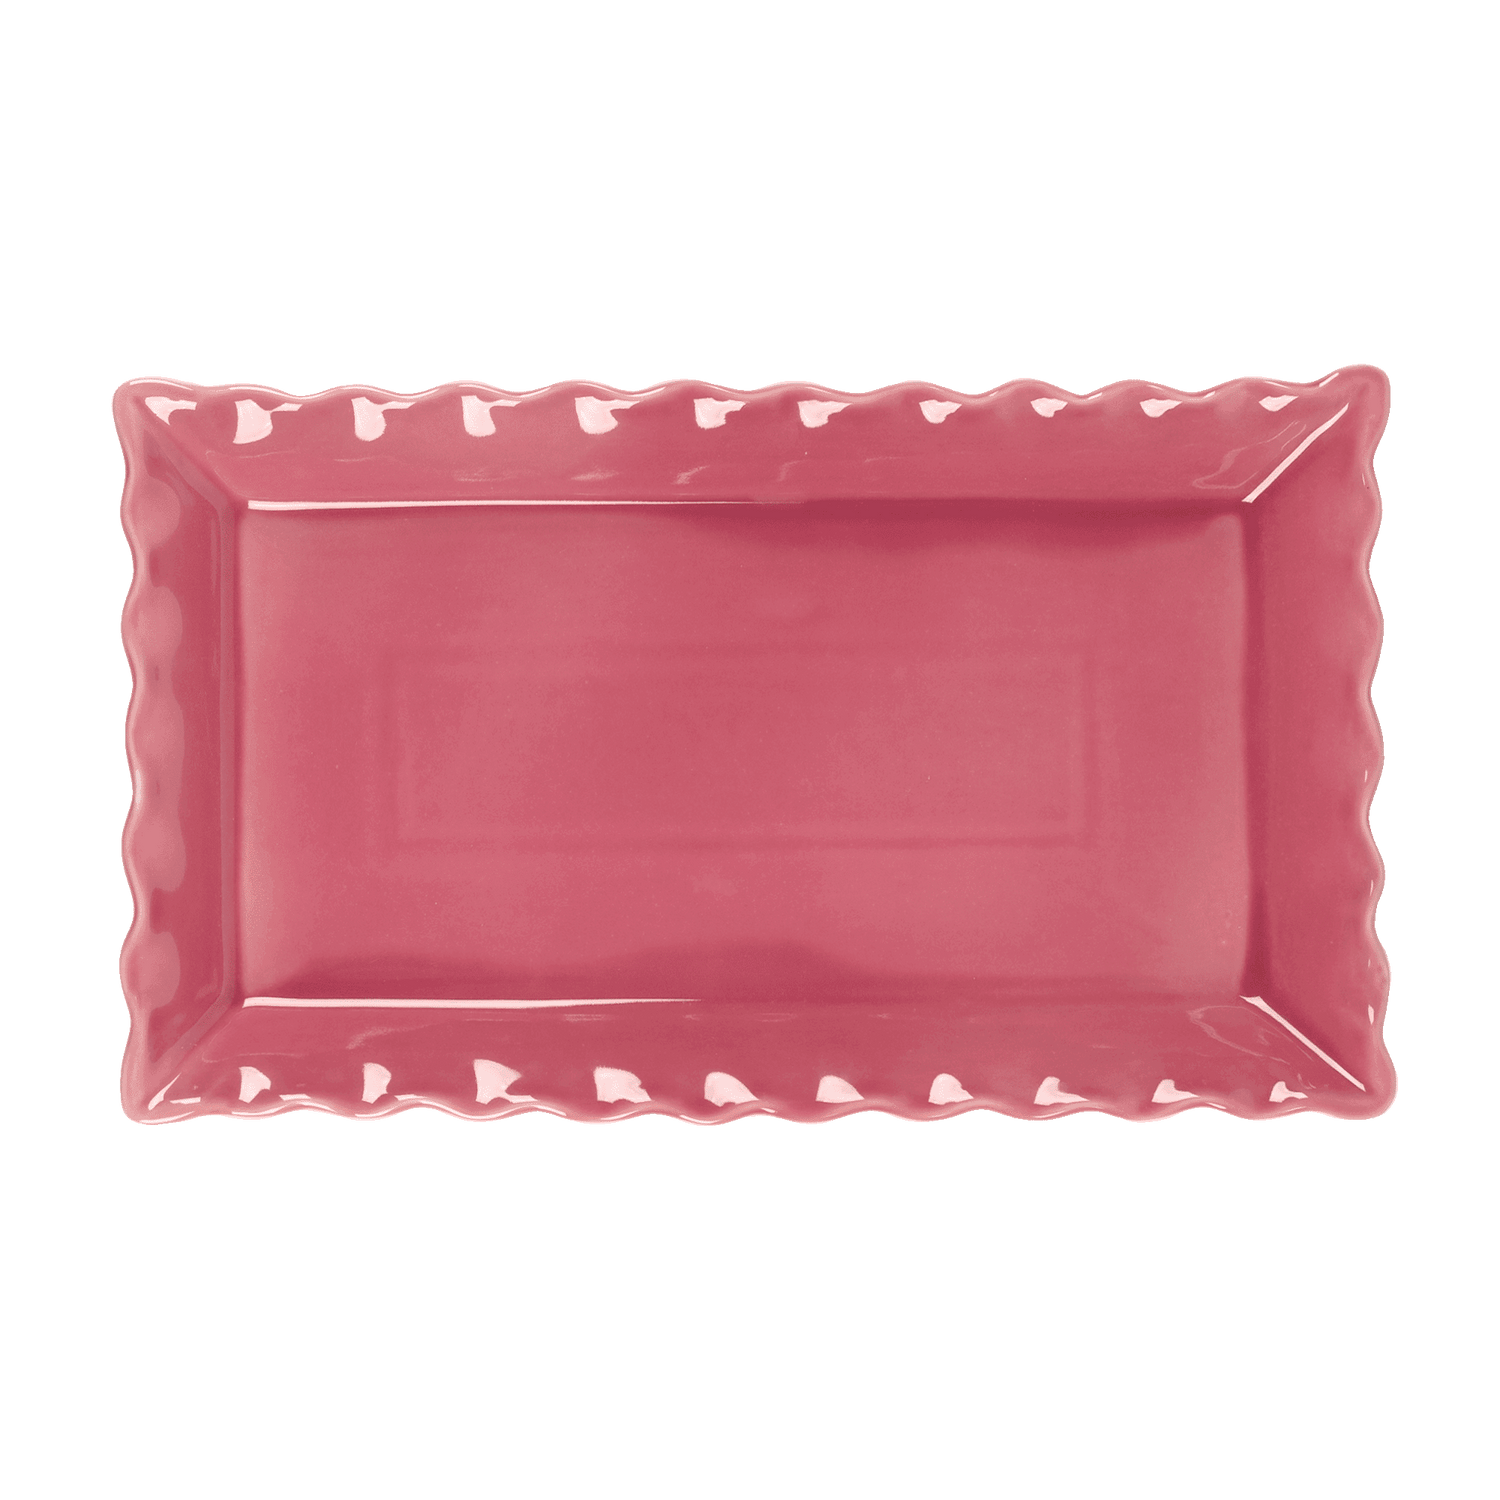 Everyday charm Serving plate - Dark pink 45x26 cm